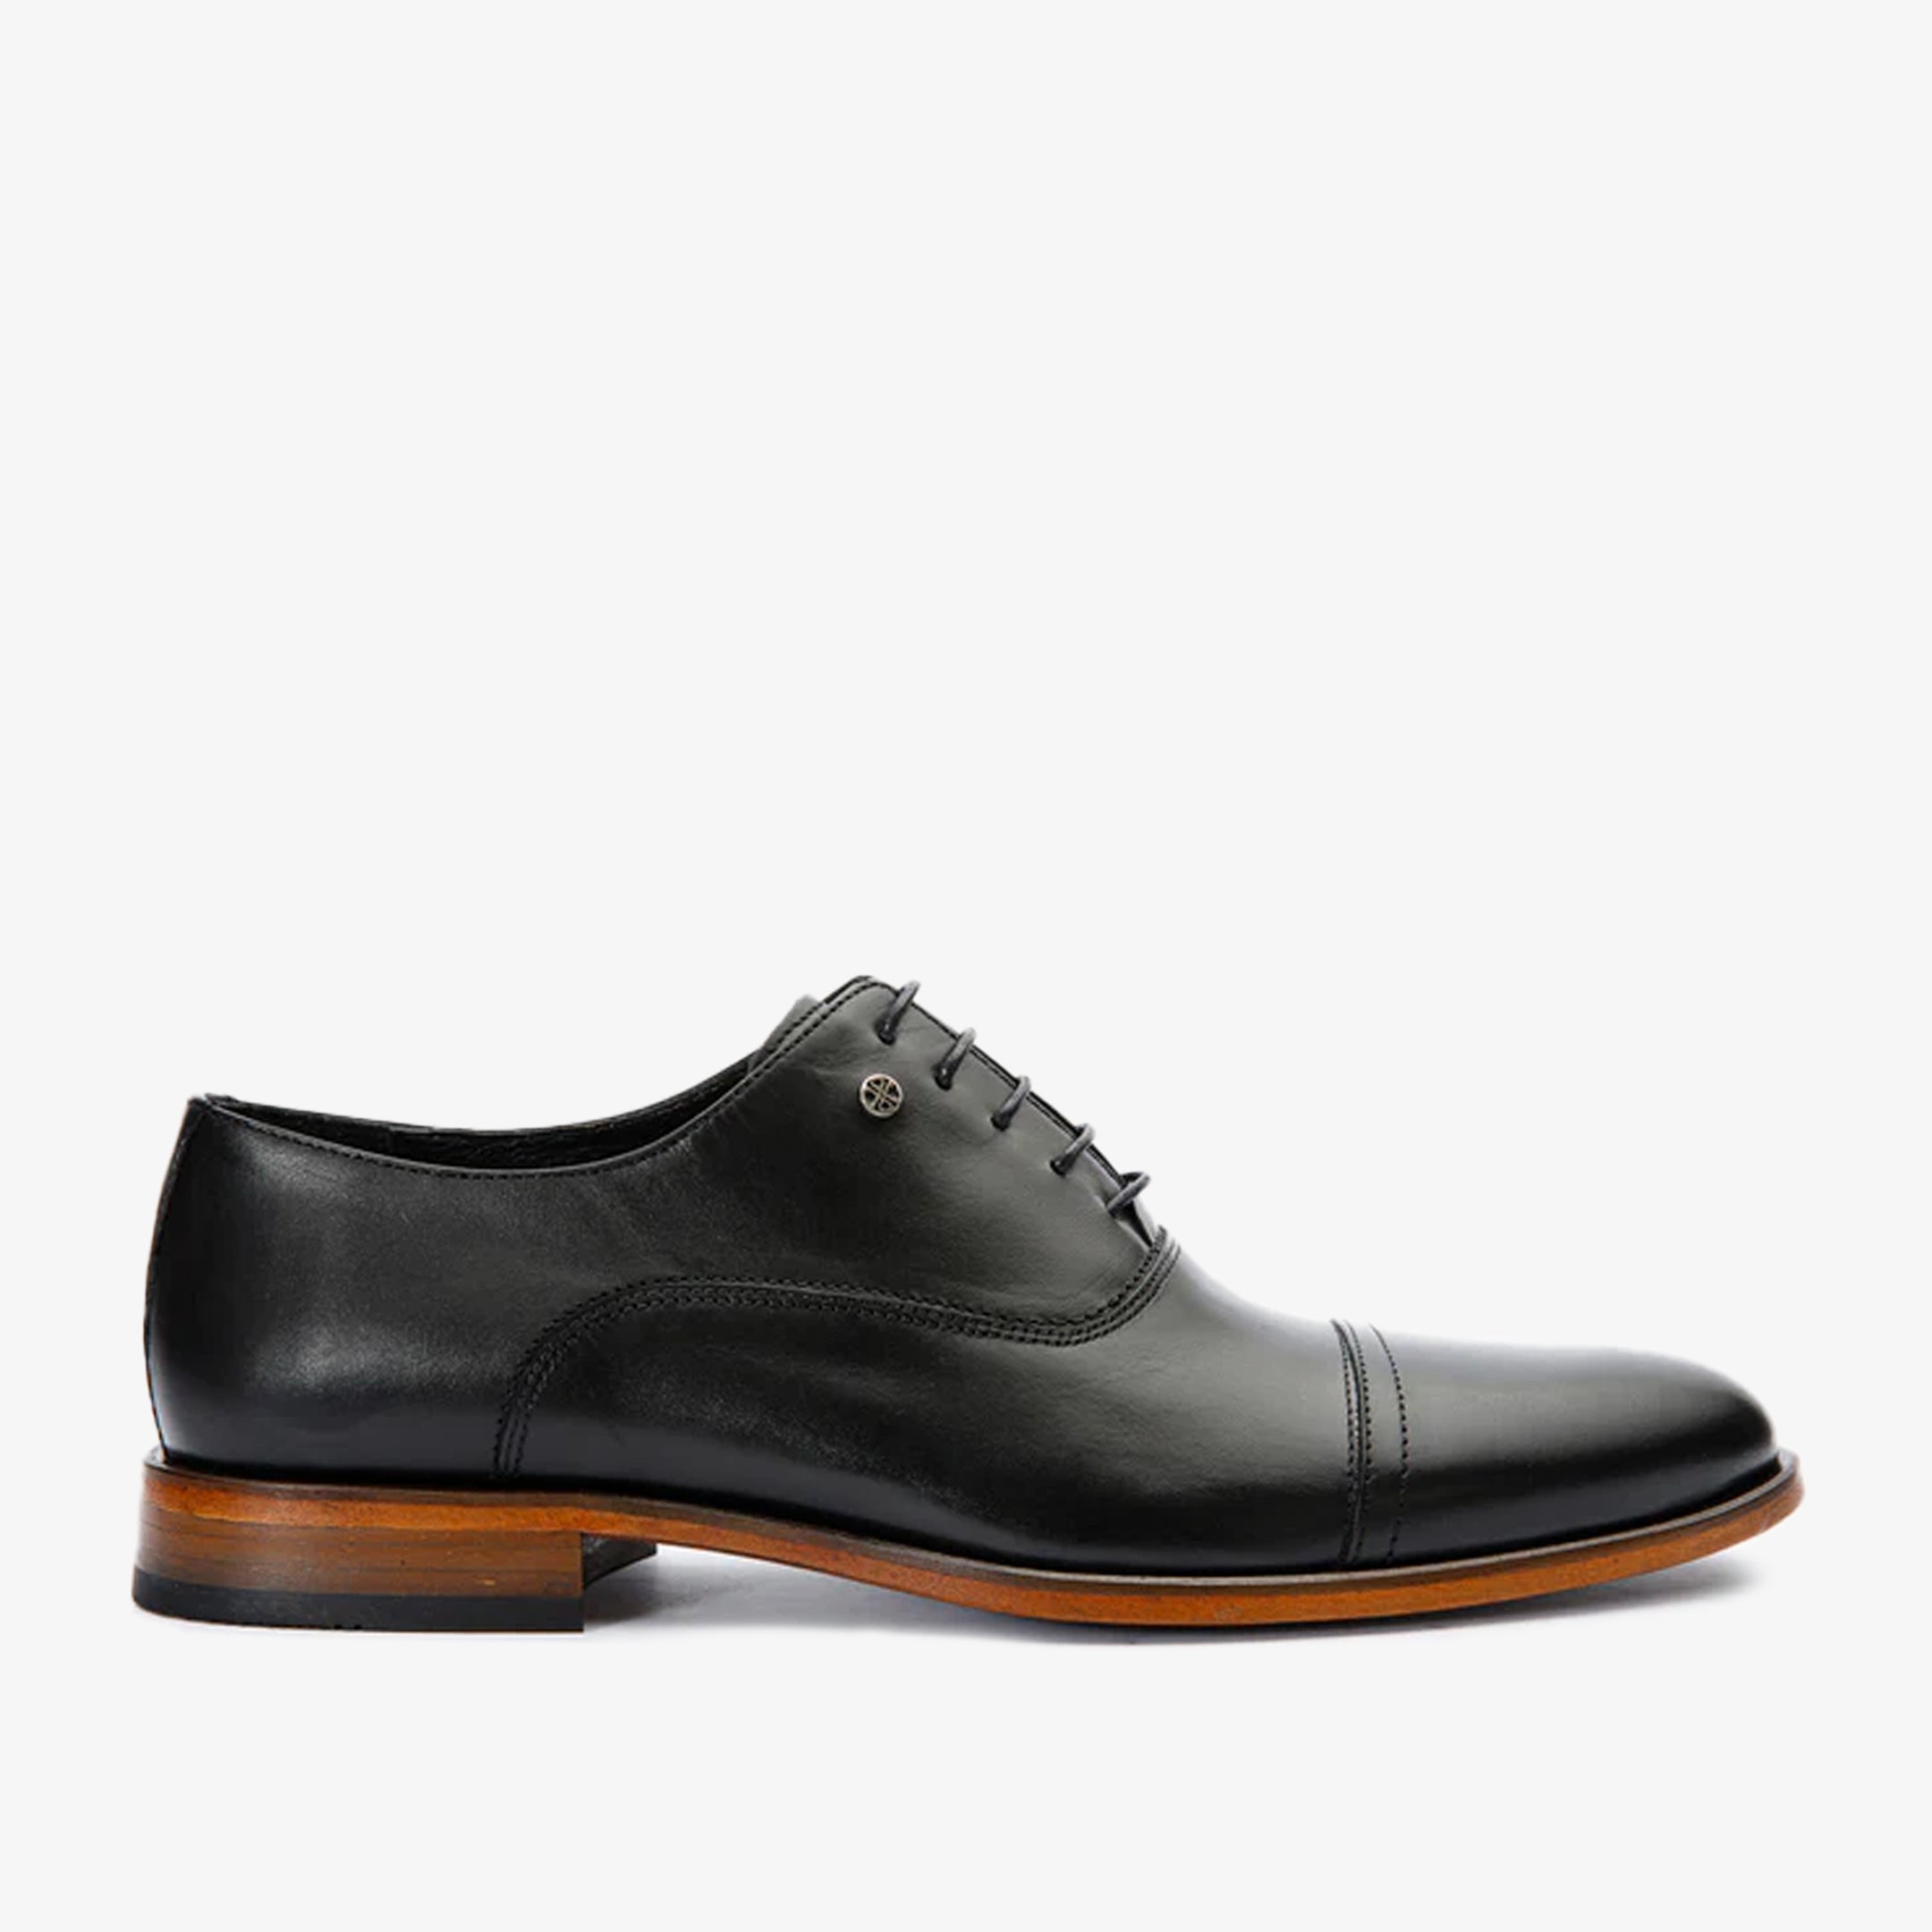 The Gambaha Black Leather Quarter Brogue Cap Toe Oxford Men Shoe